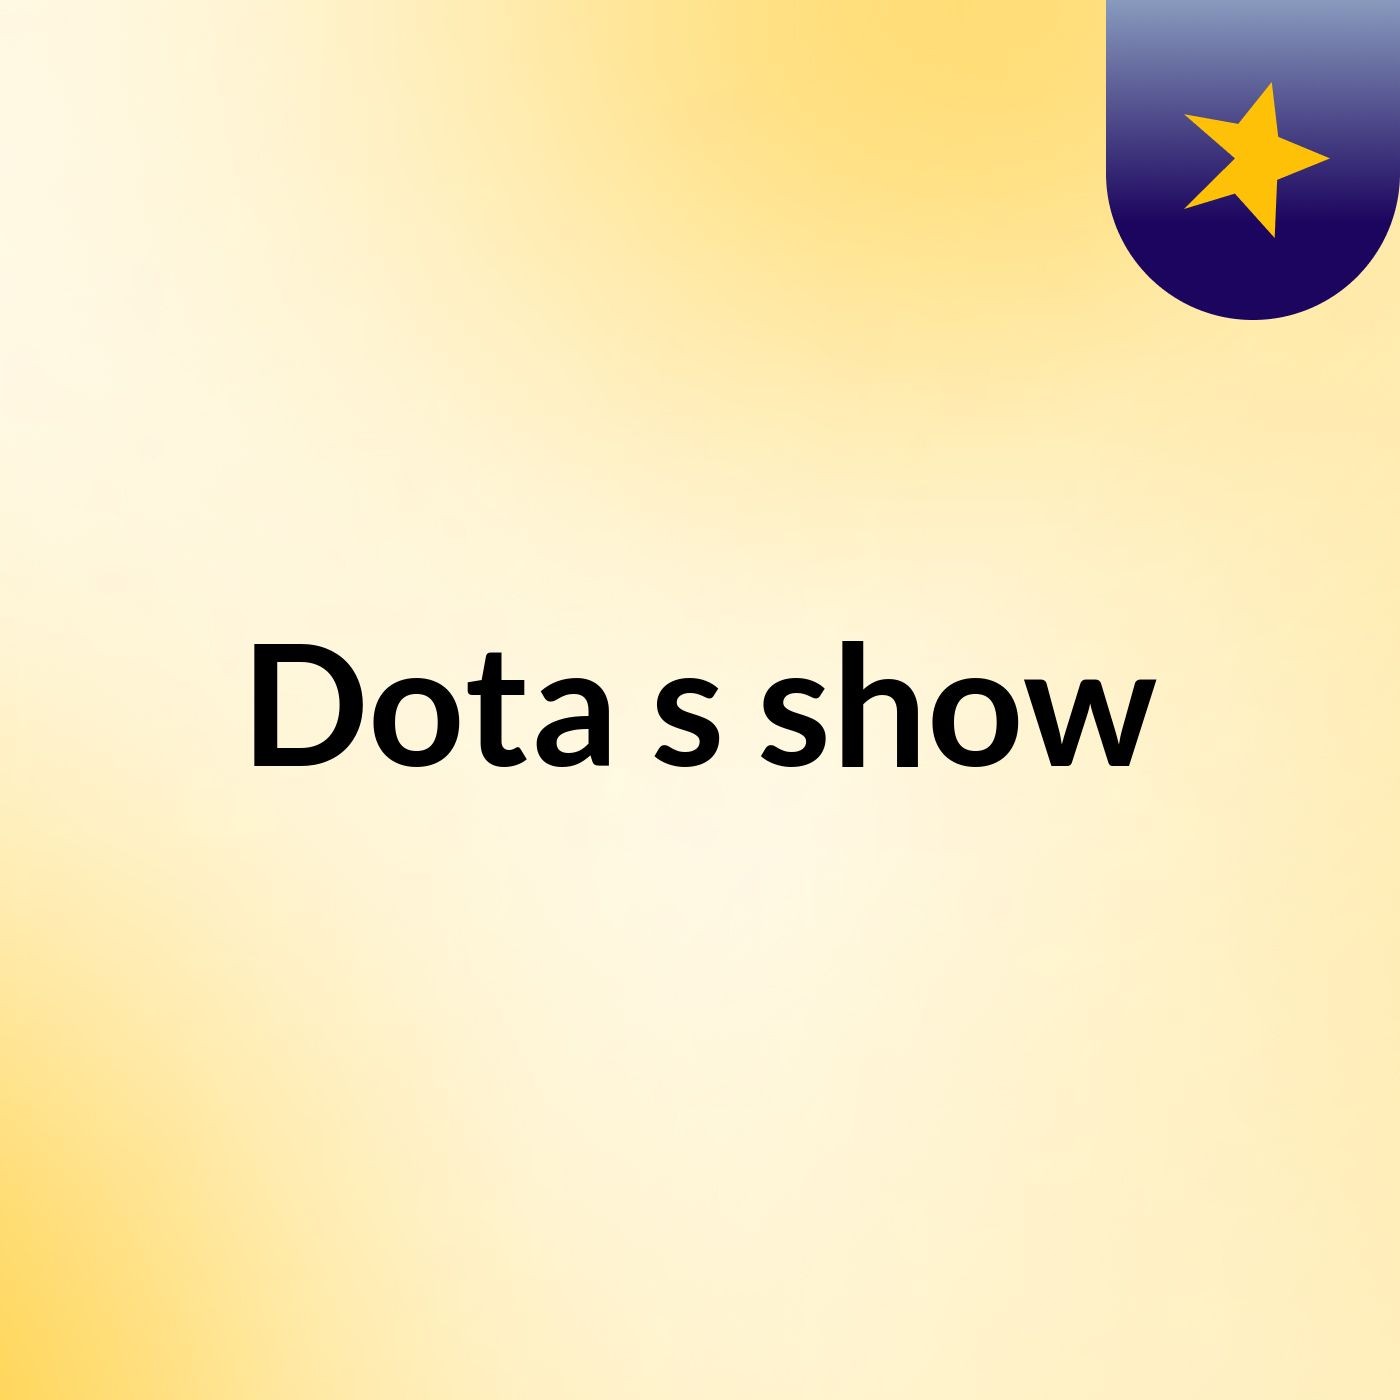 Dota's show